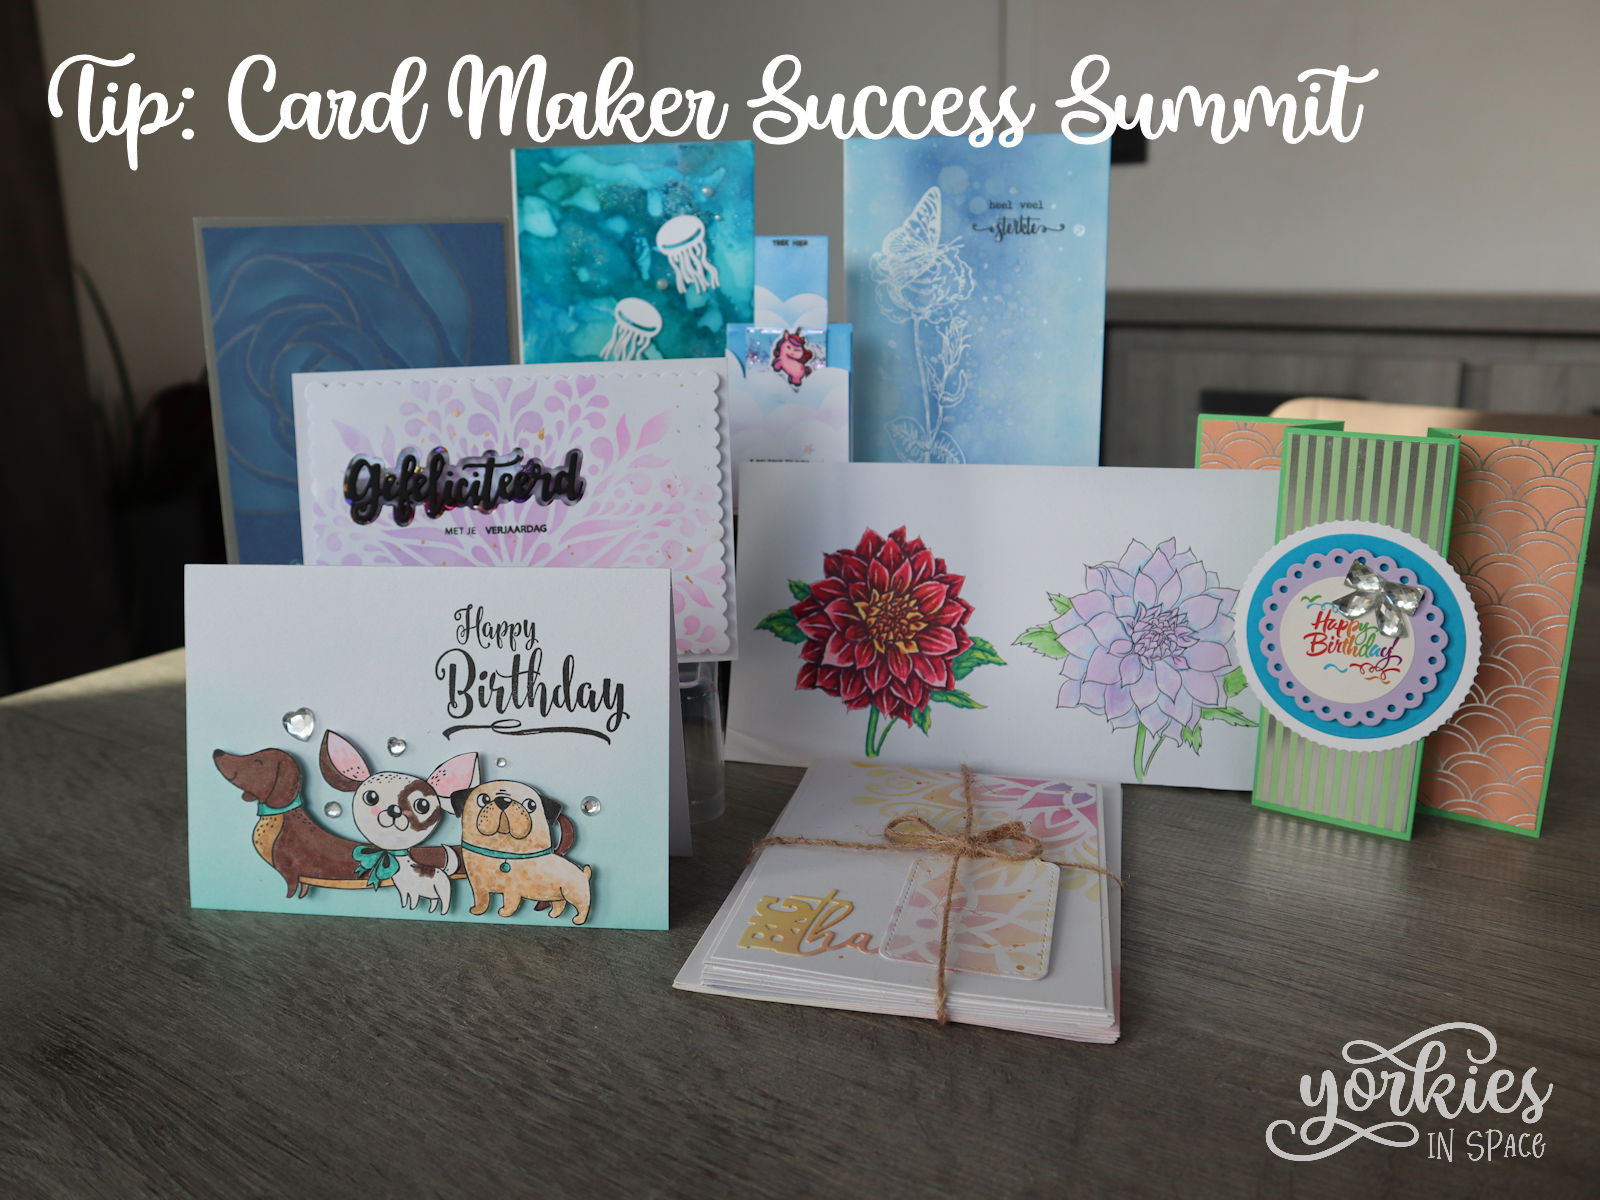 Tip: Card Maker Success Summit